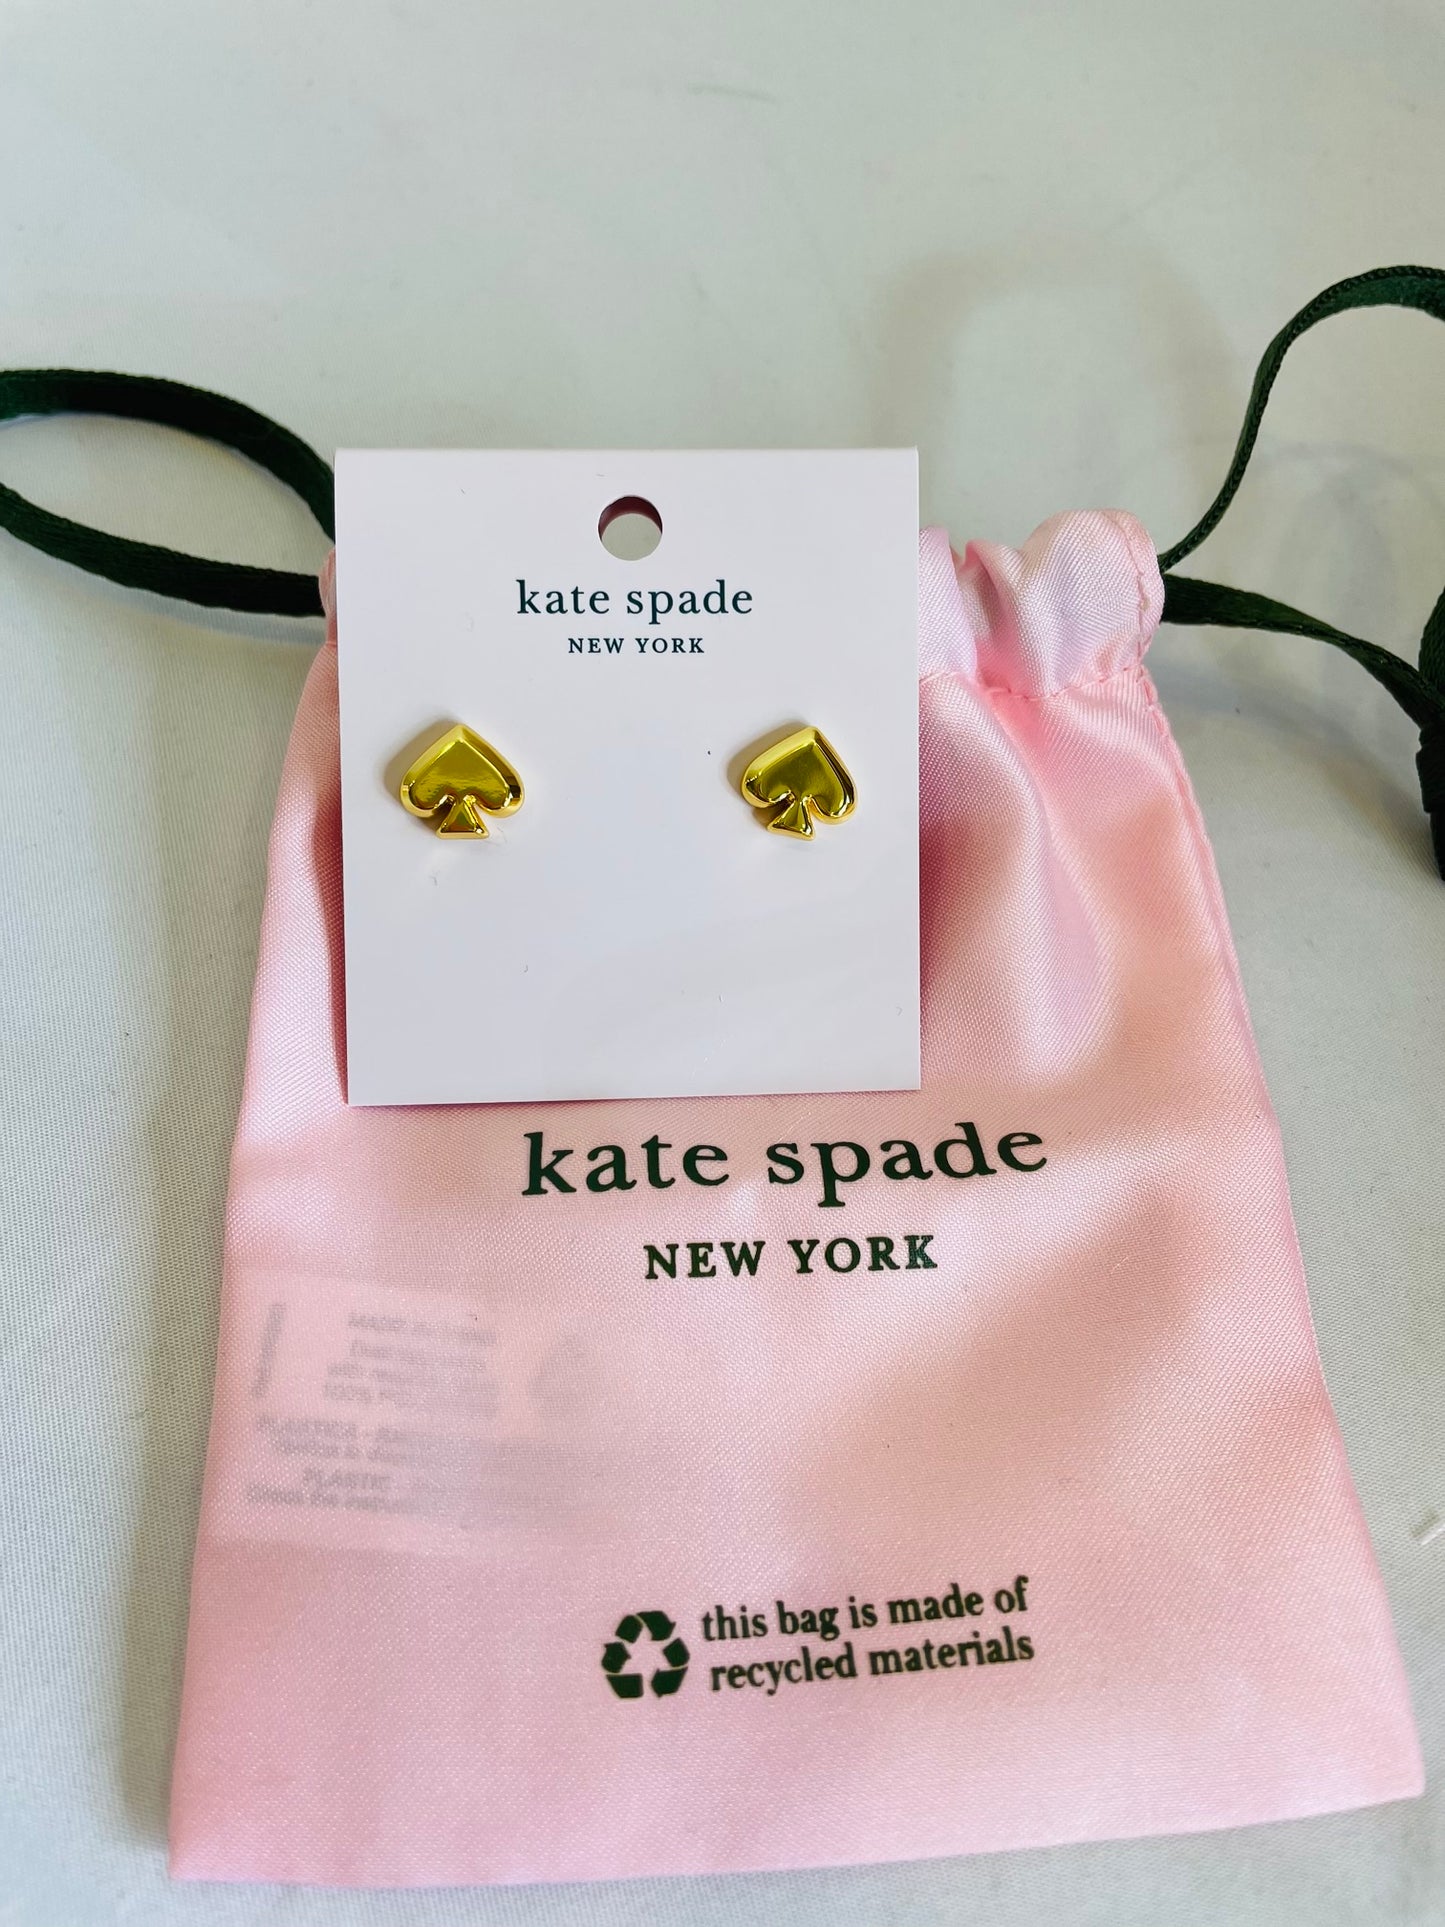 Kate spade earring